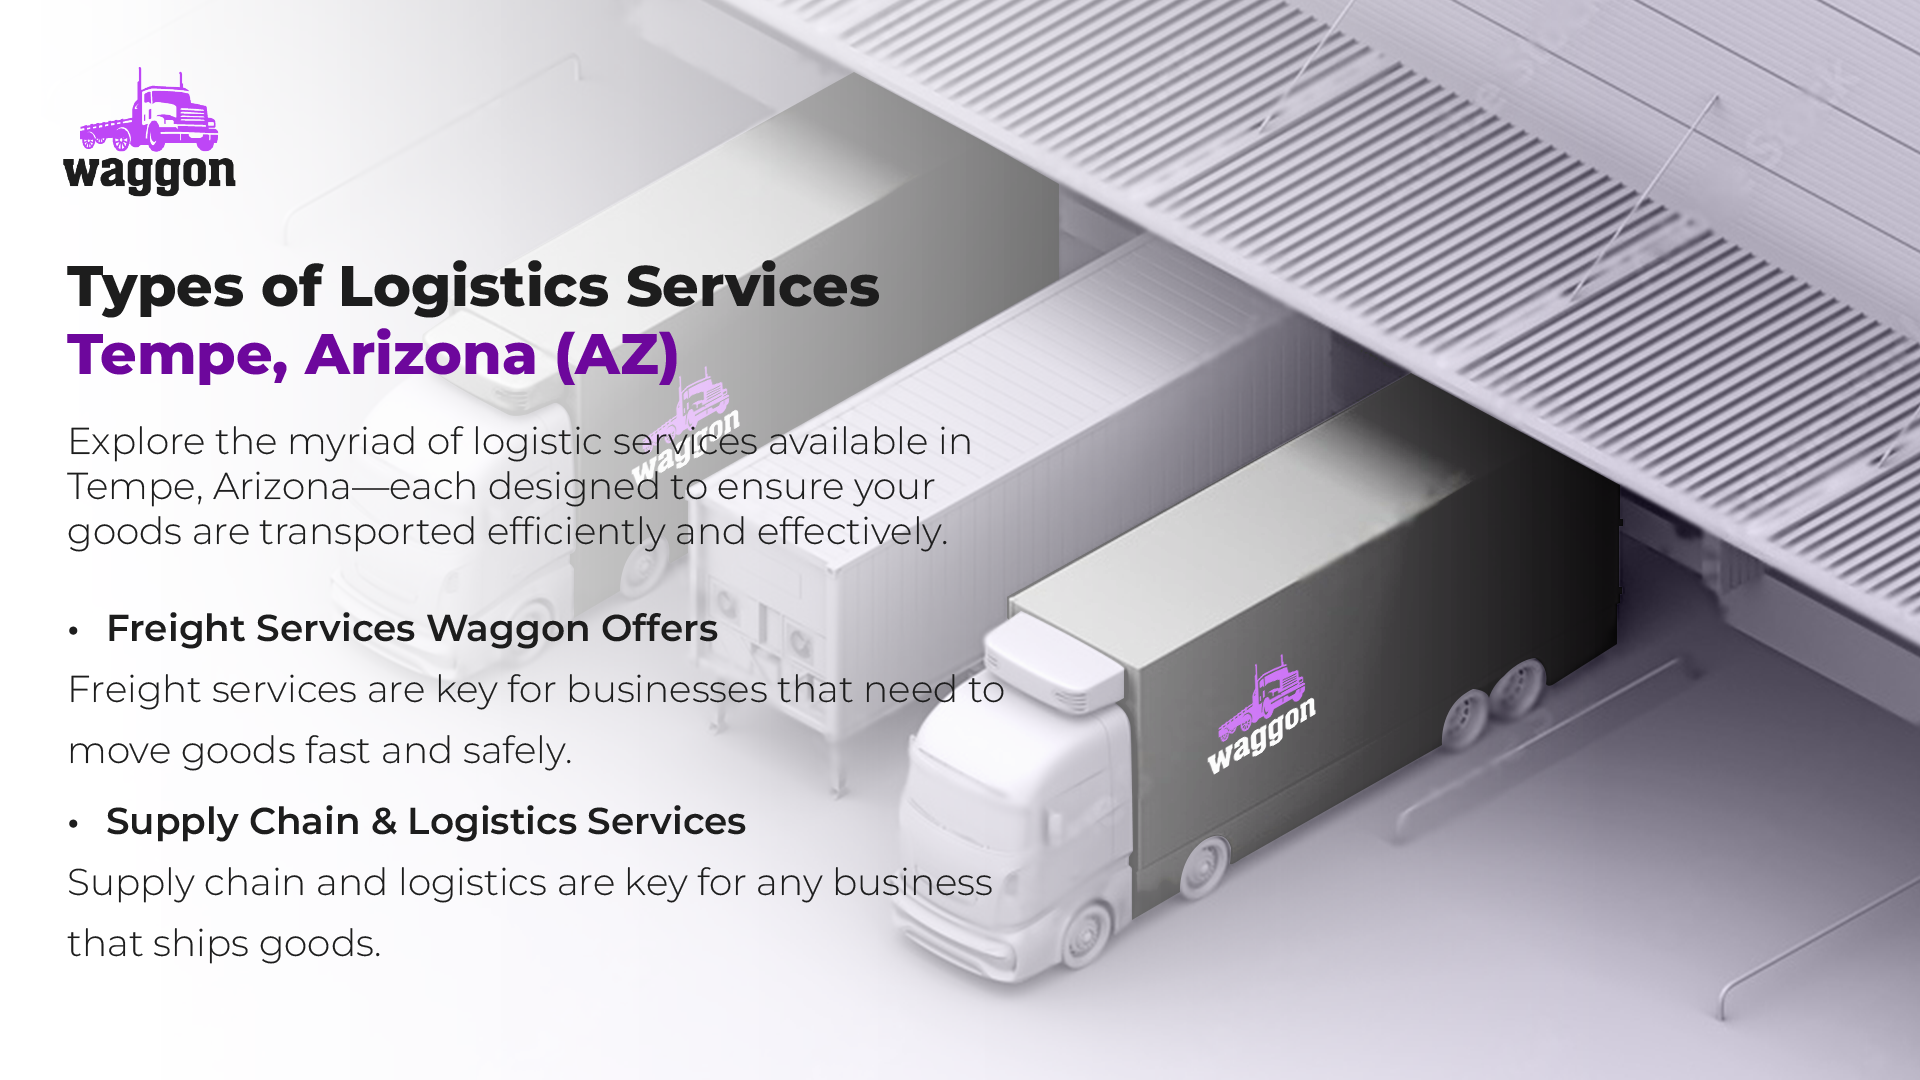 Types of Logistics Services in Tempe, Arizona (AZ)